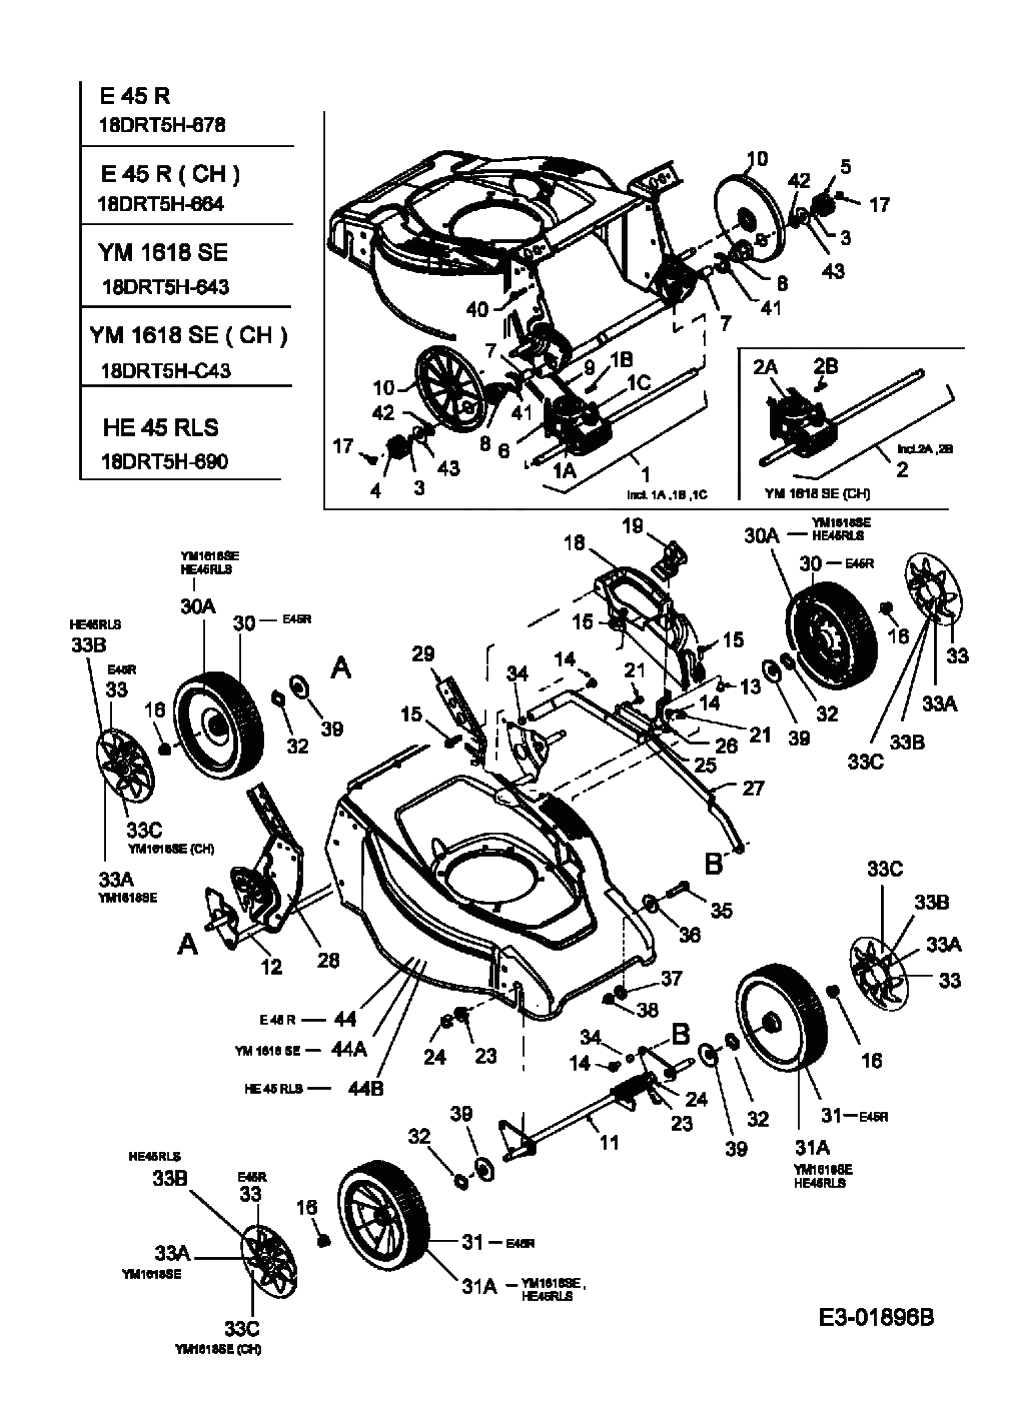 MTD Артикул 18DRT5H-664 (год выпуска 2005). Коробка передач, колеса, регулятор высоты